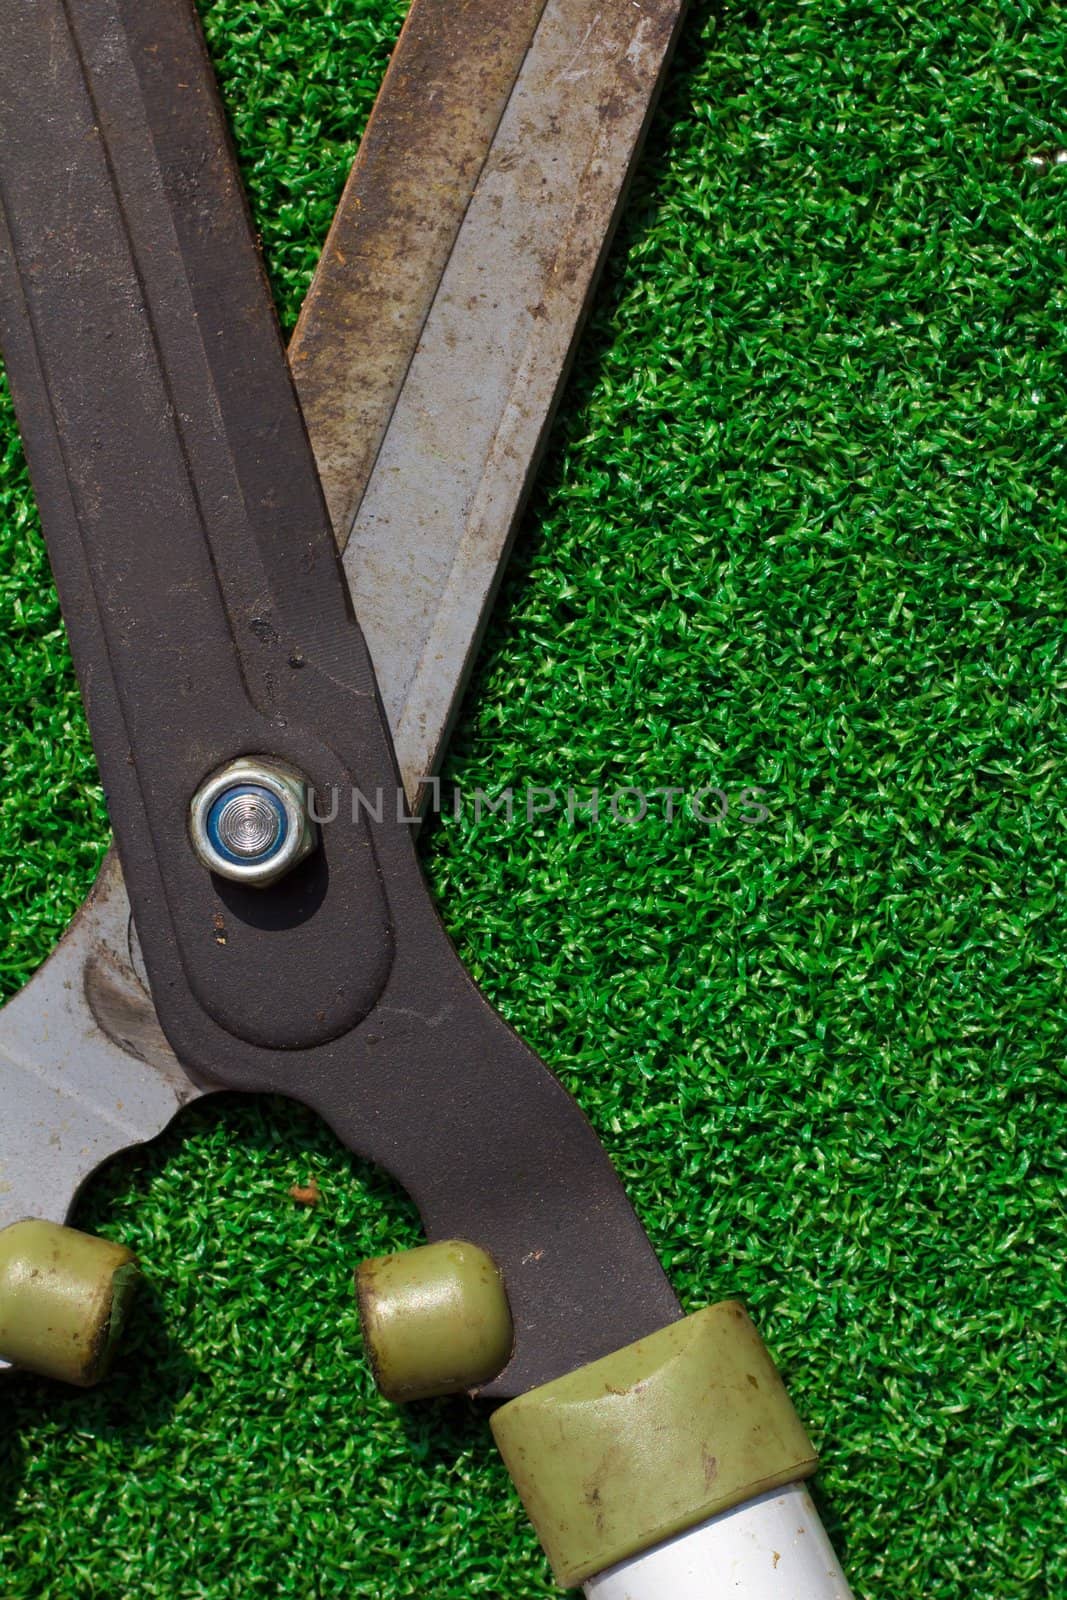 Scissors cut the grass by ponsulak